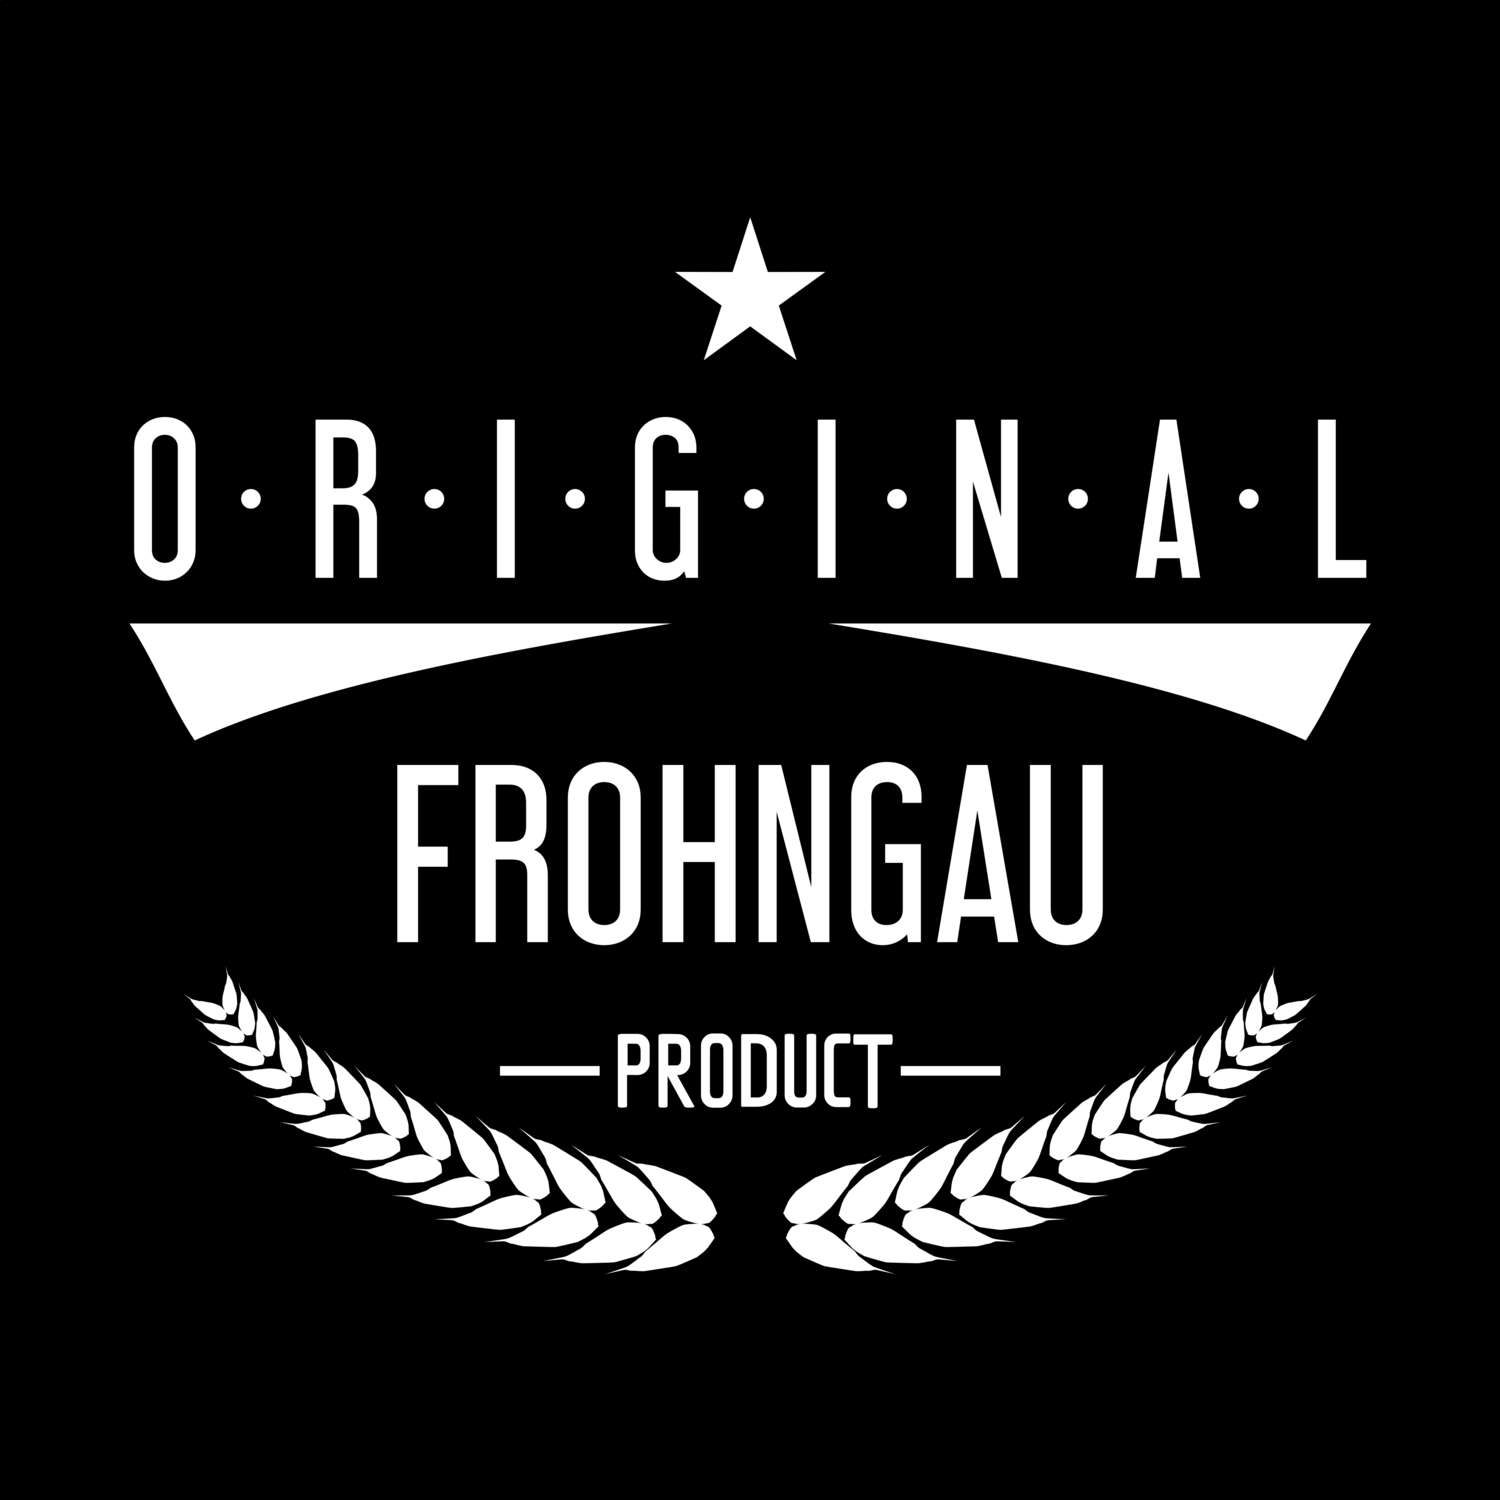 Frohngau T-Shirt »Original Product«